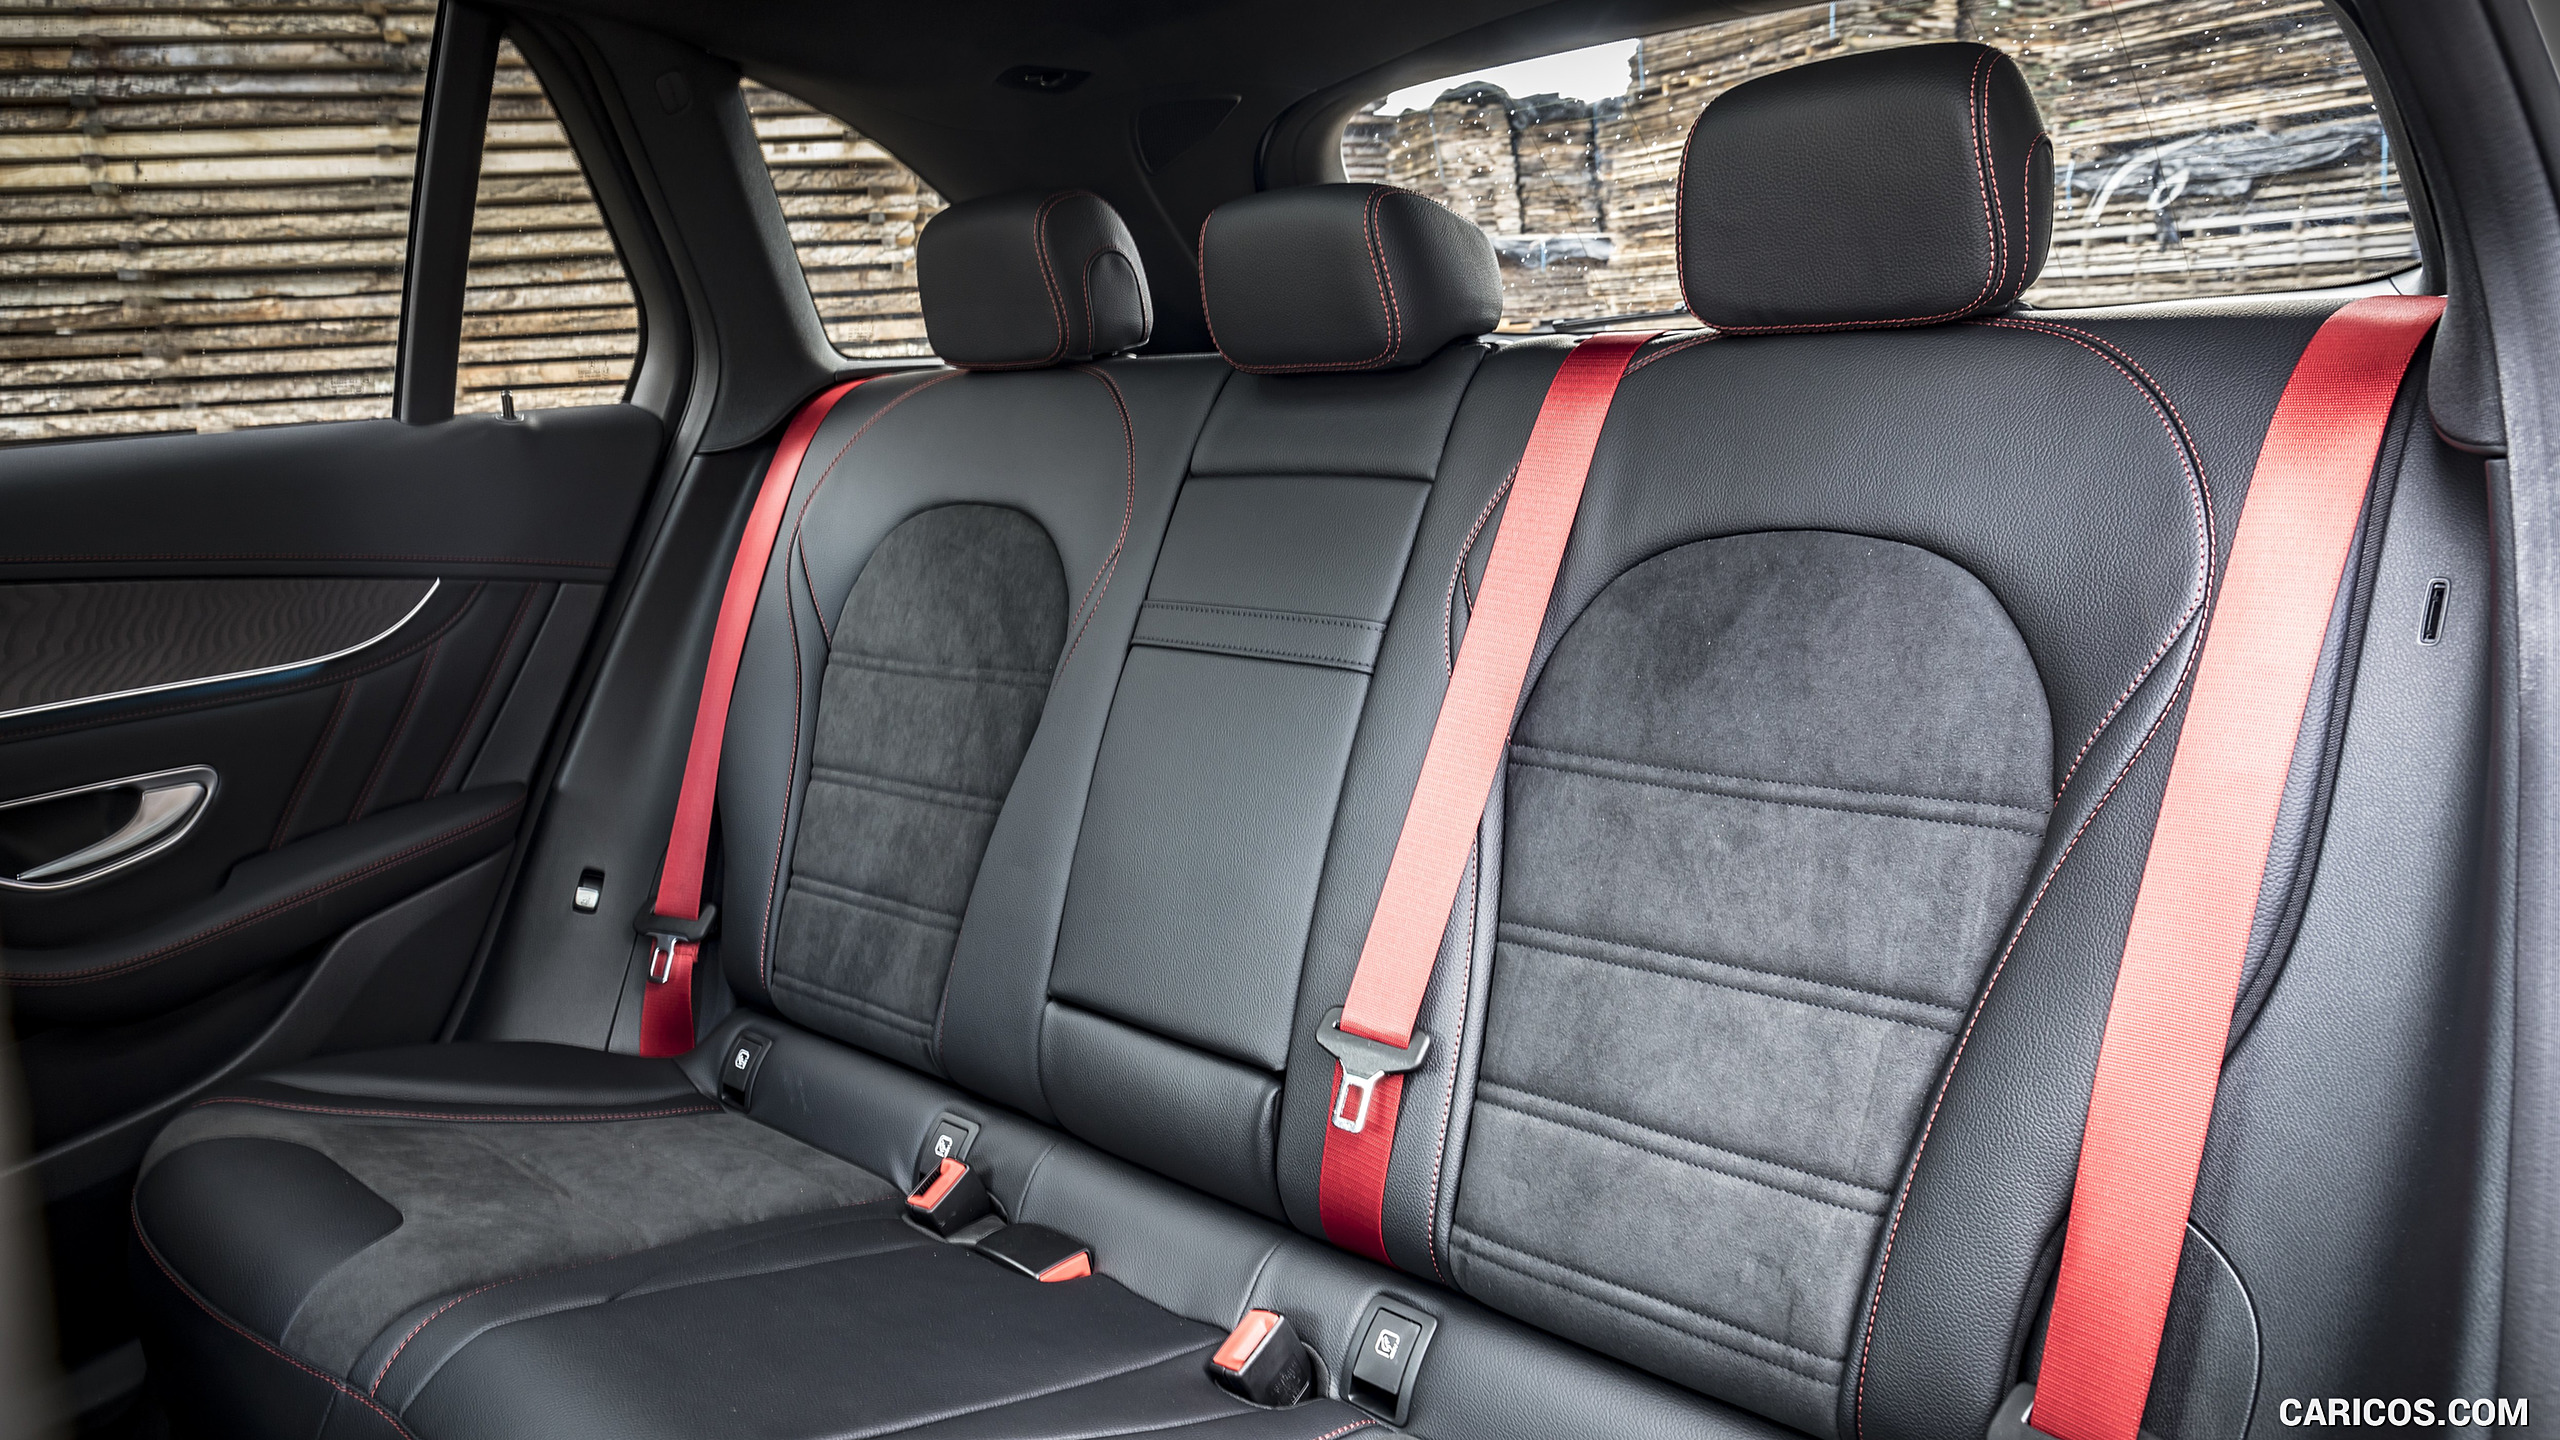 2017 Mercedes-AMG GLC 43 4MATIC (UK-Spec) - Interior, Rear Seats, #77 of 108